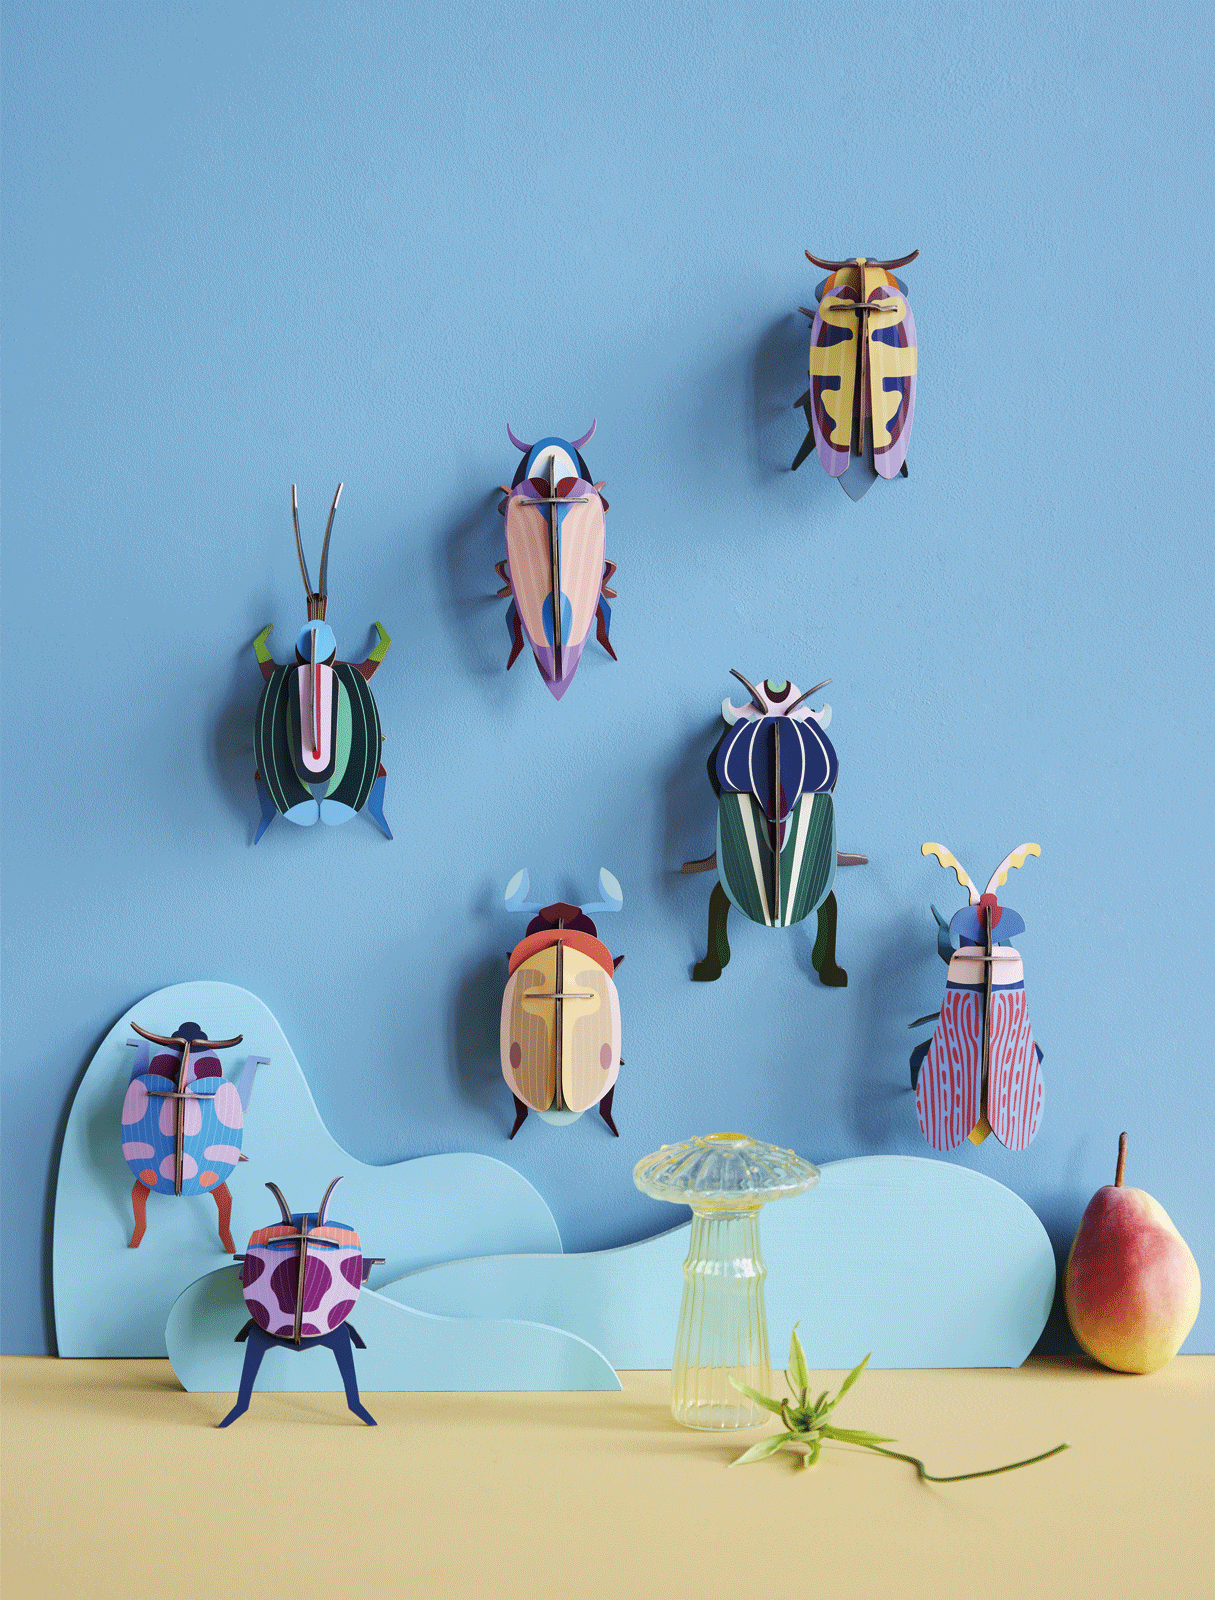 Studio ROOF – Nástěnná dekorace Lemon Fruit Beetle / brouk lesknáček